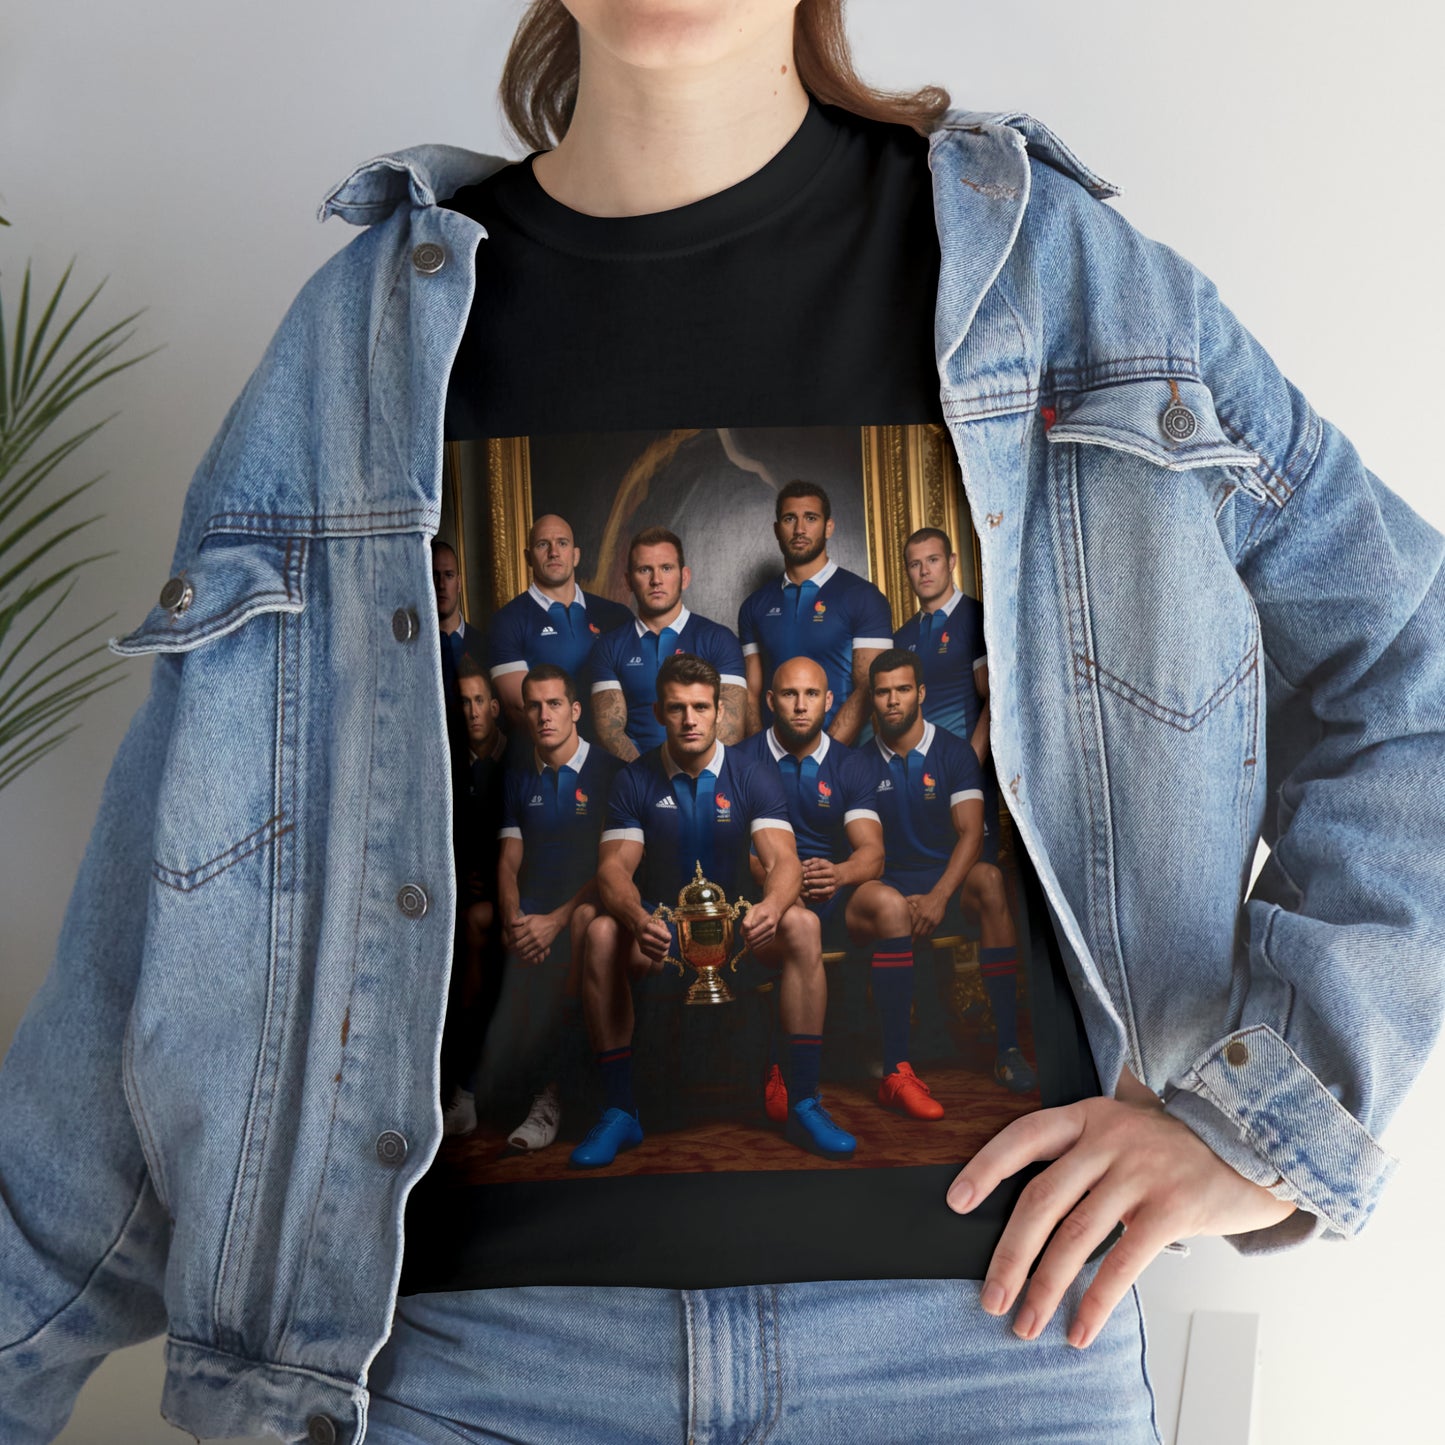 France World Cup Photoshoot - dark shirts